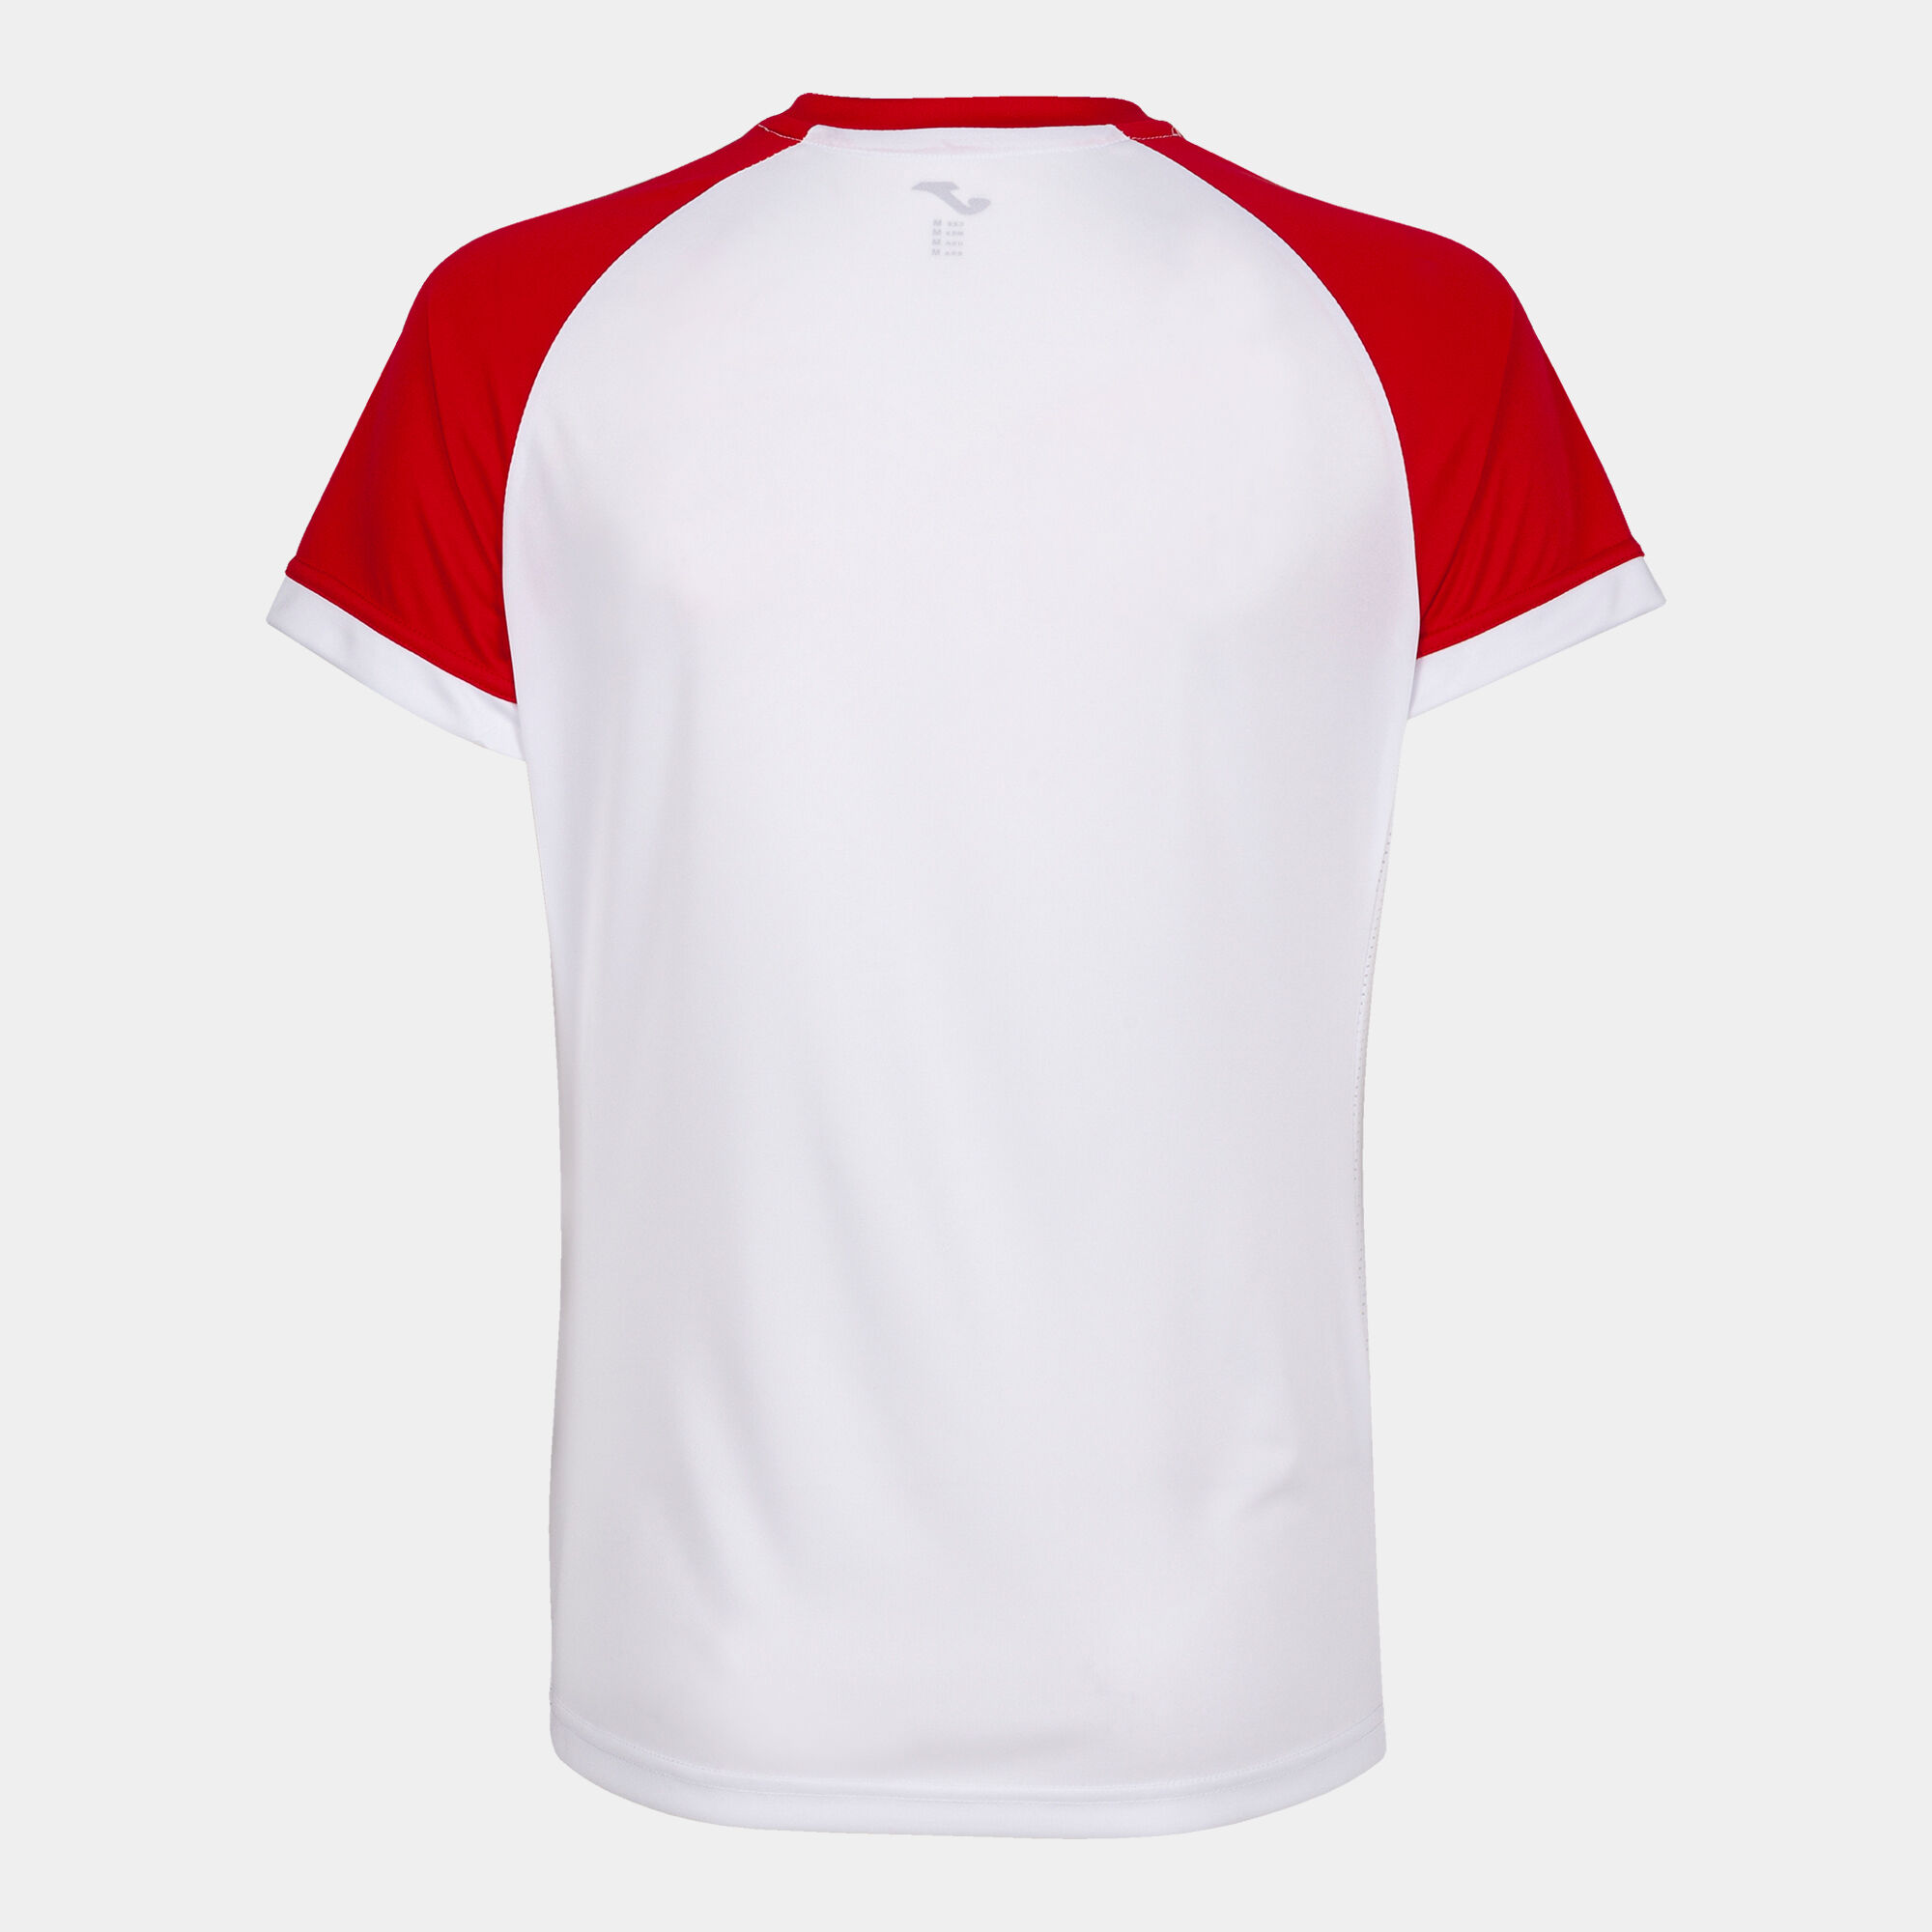 T-shirt manga curta mulher Supernova II branco vermelho